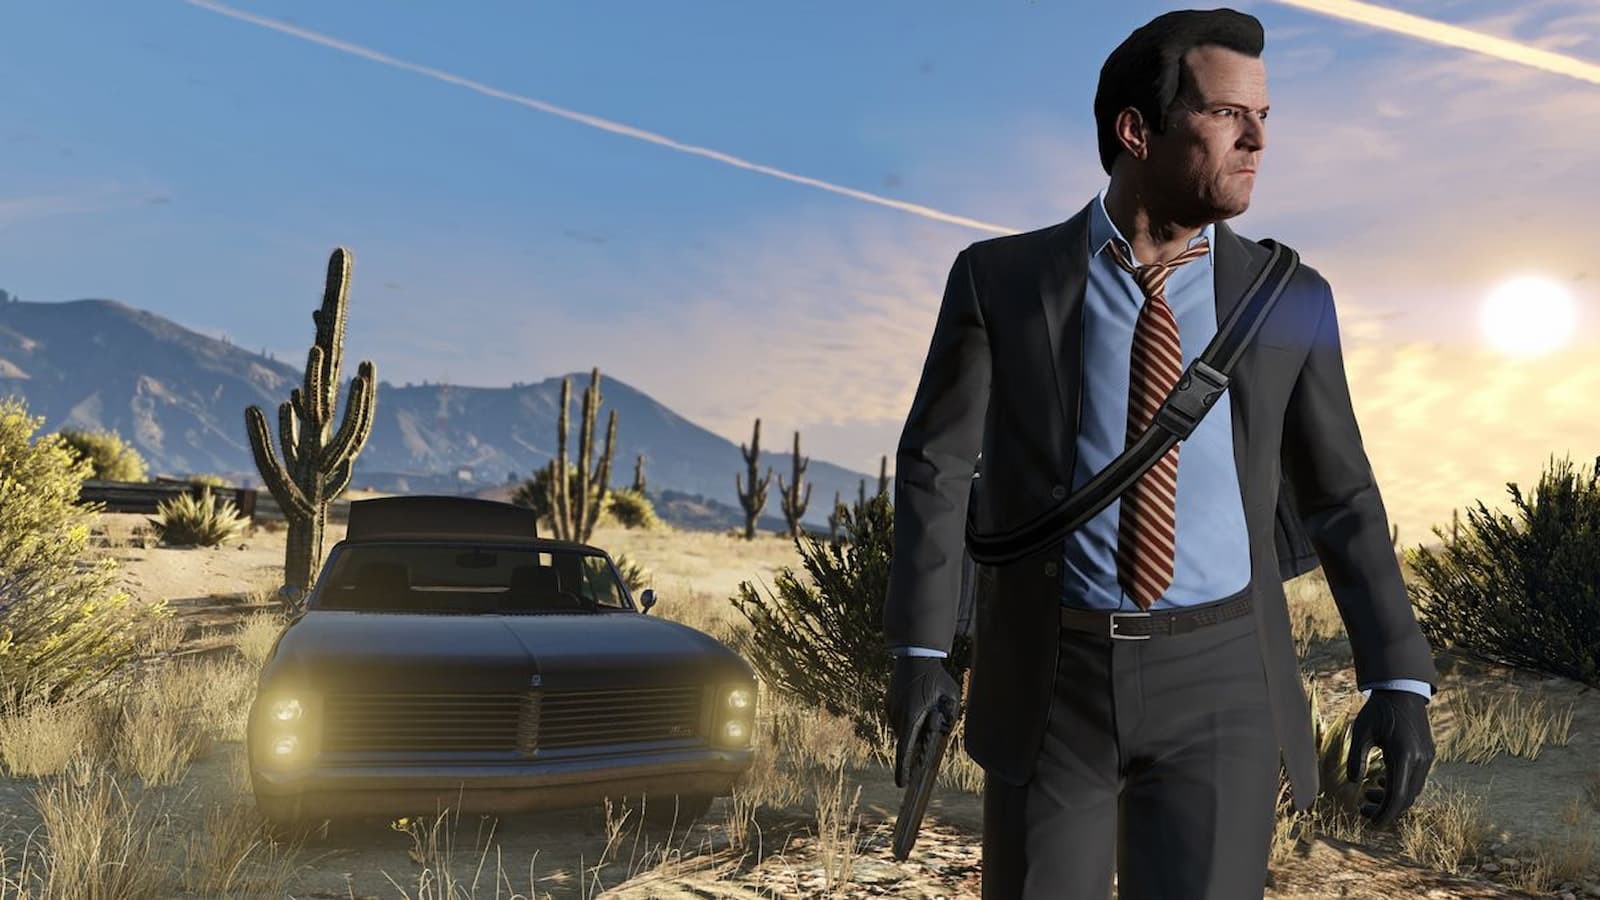 GTA 5 protagonist Michael standing in a desert, behind him a car